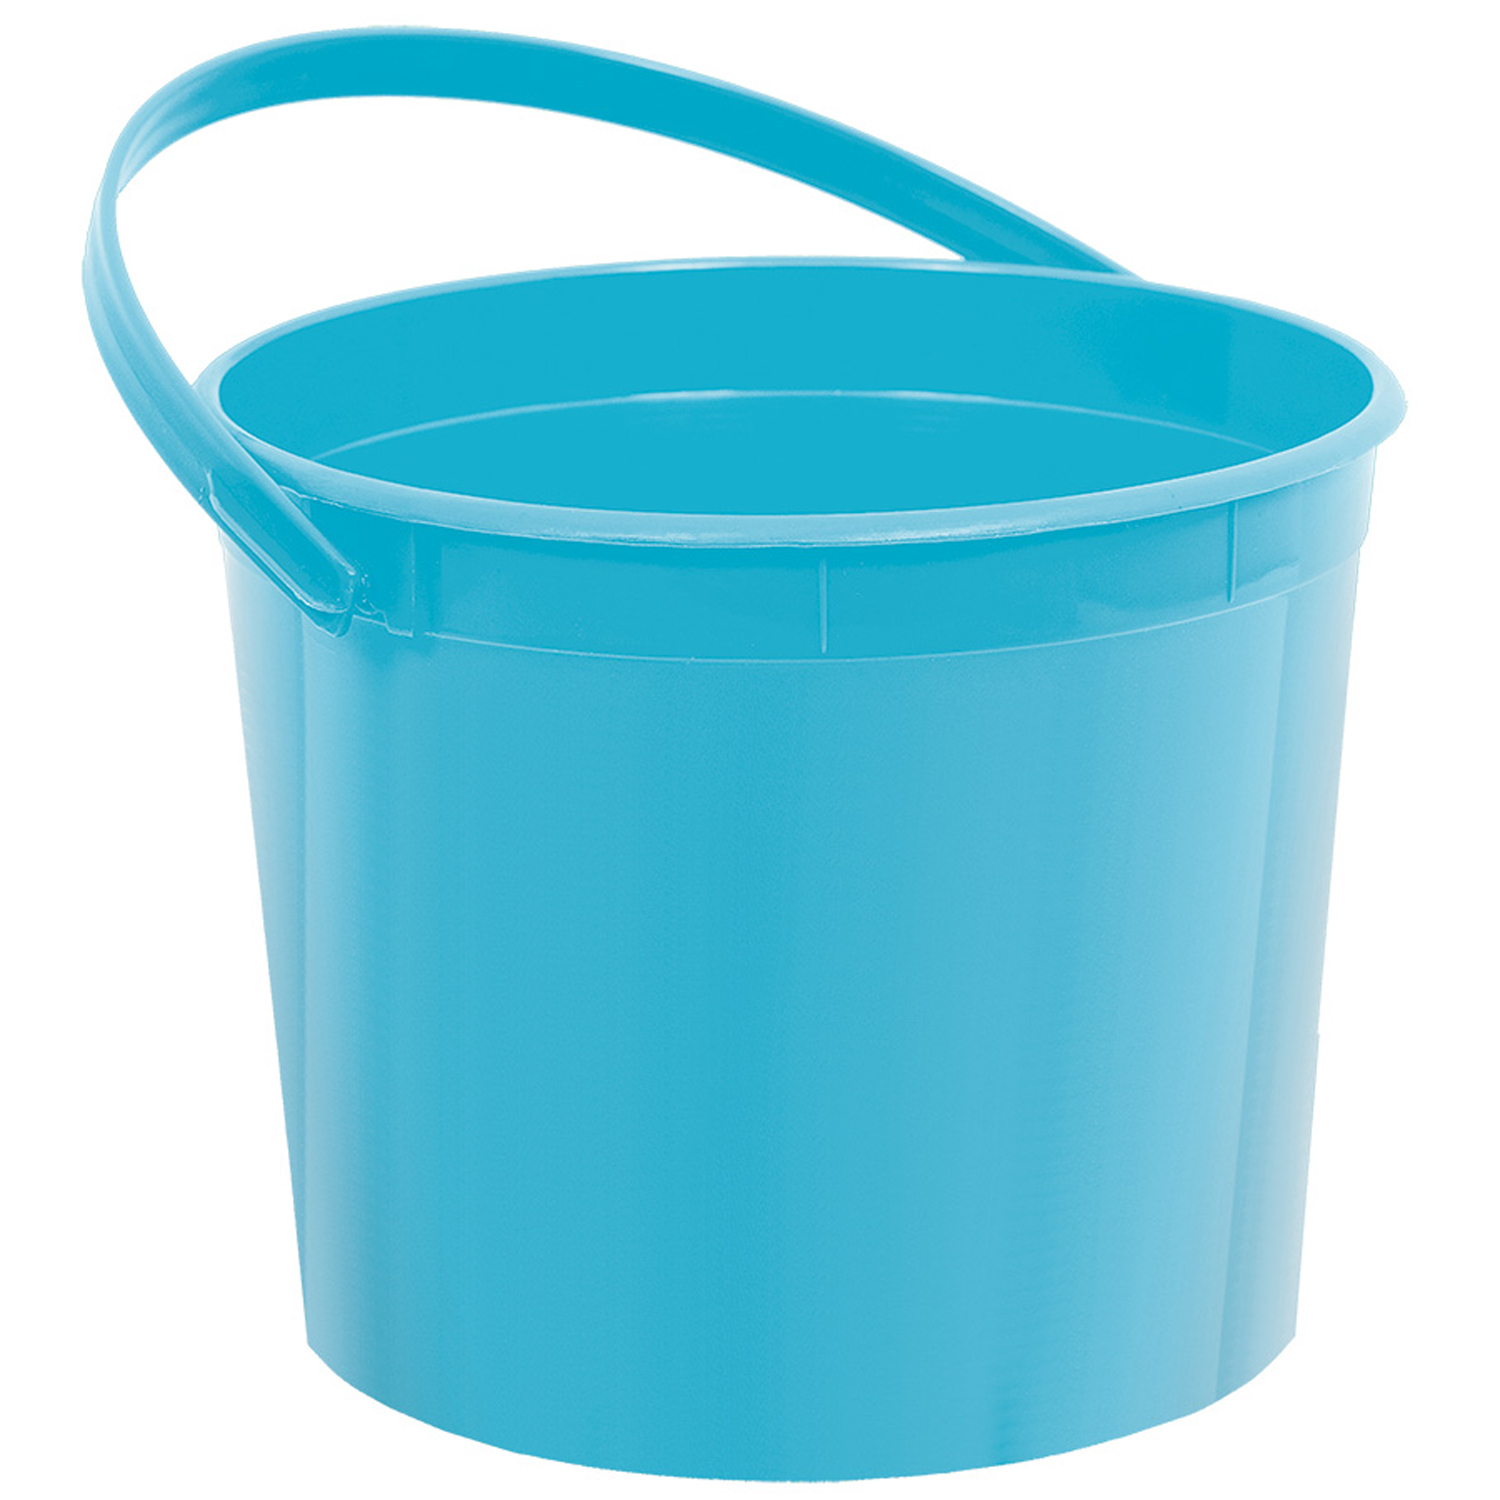 Caribbean Blue Plastic Buckets with Handles 11cm h x 17cm dia - 12